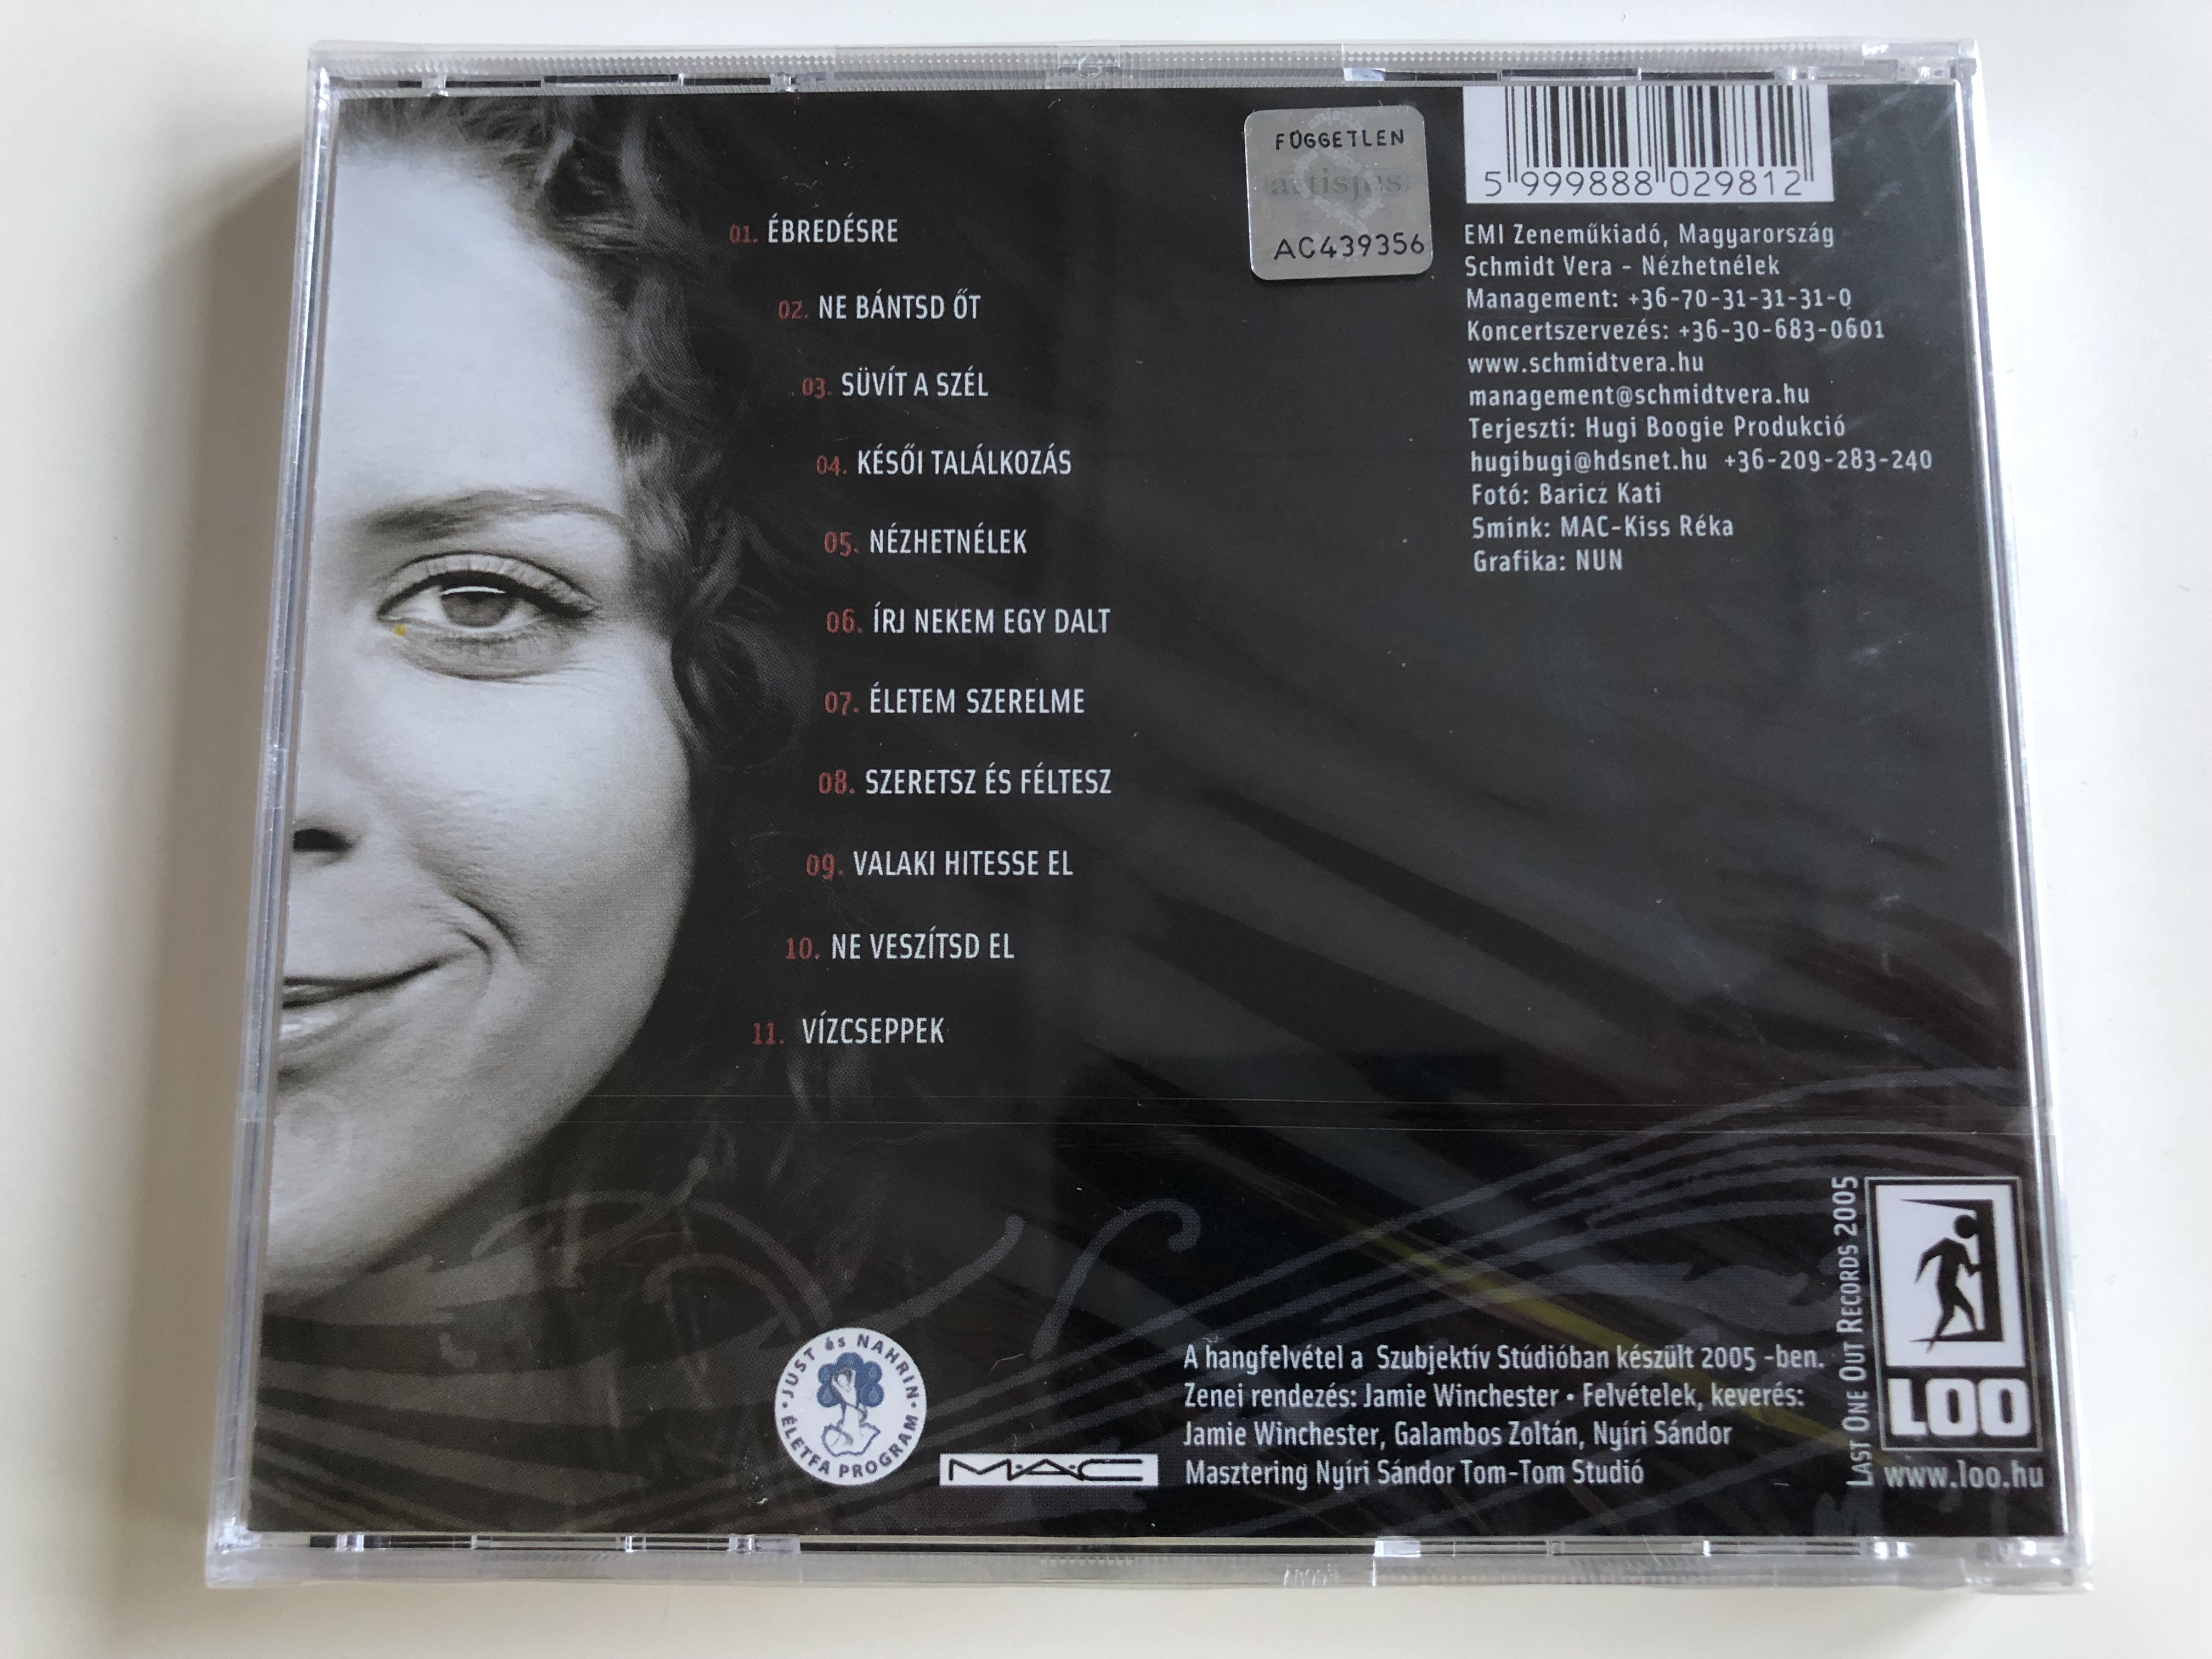 schmidt-vera-n-zhetn-lek-audio-cd-2005-emi-2-.jpg